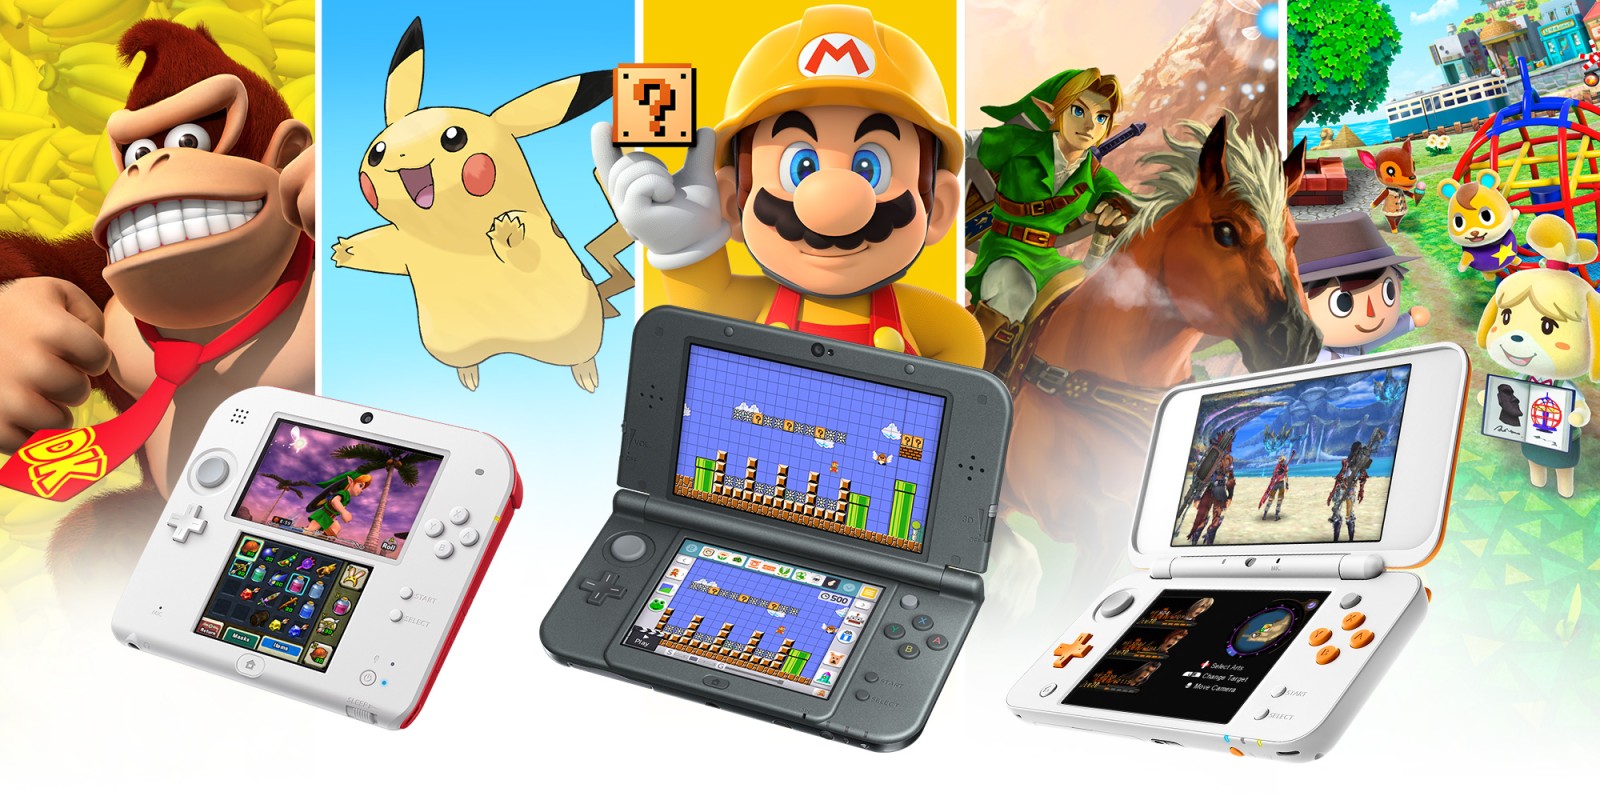 Nintendo 3DS Hardware | Nintendo